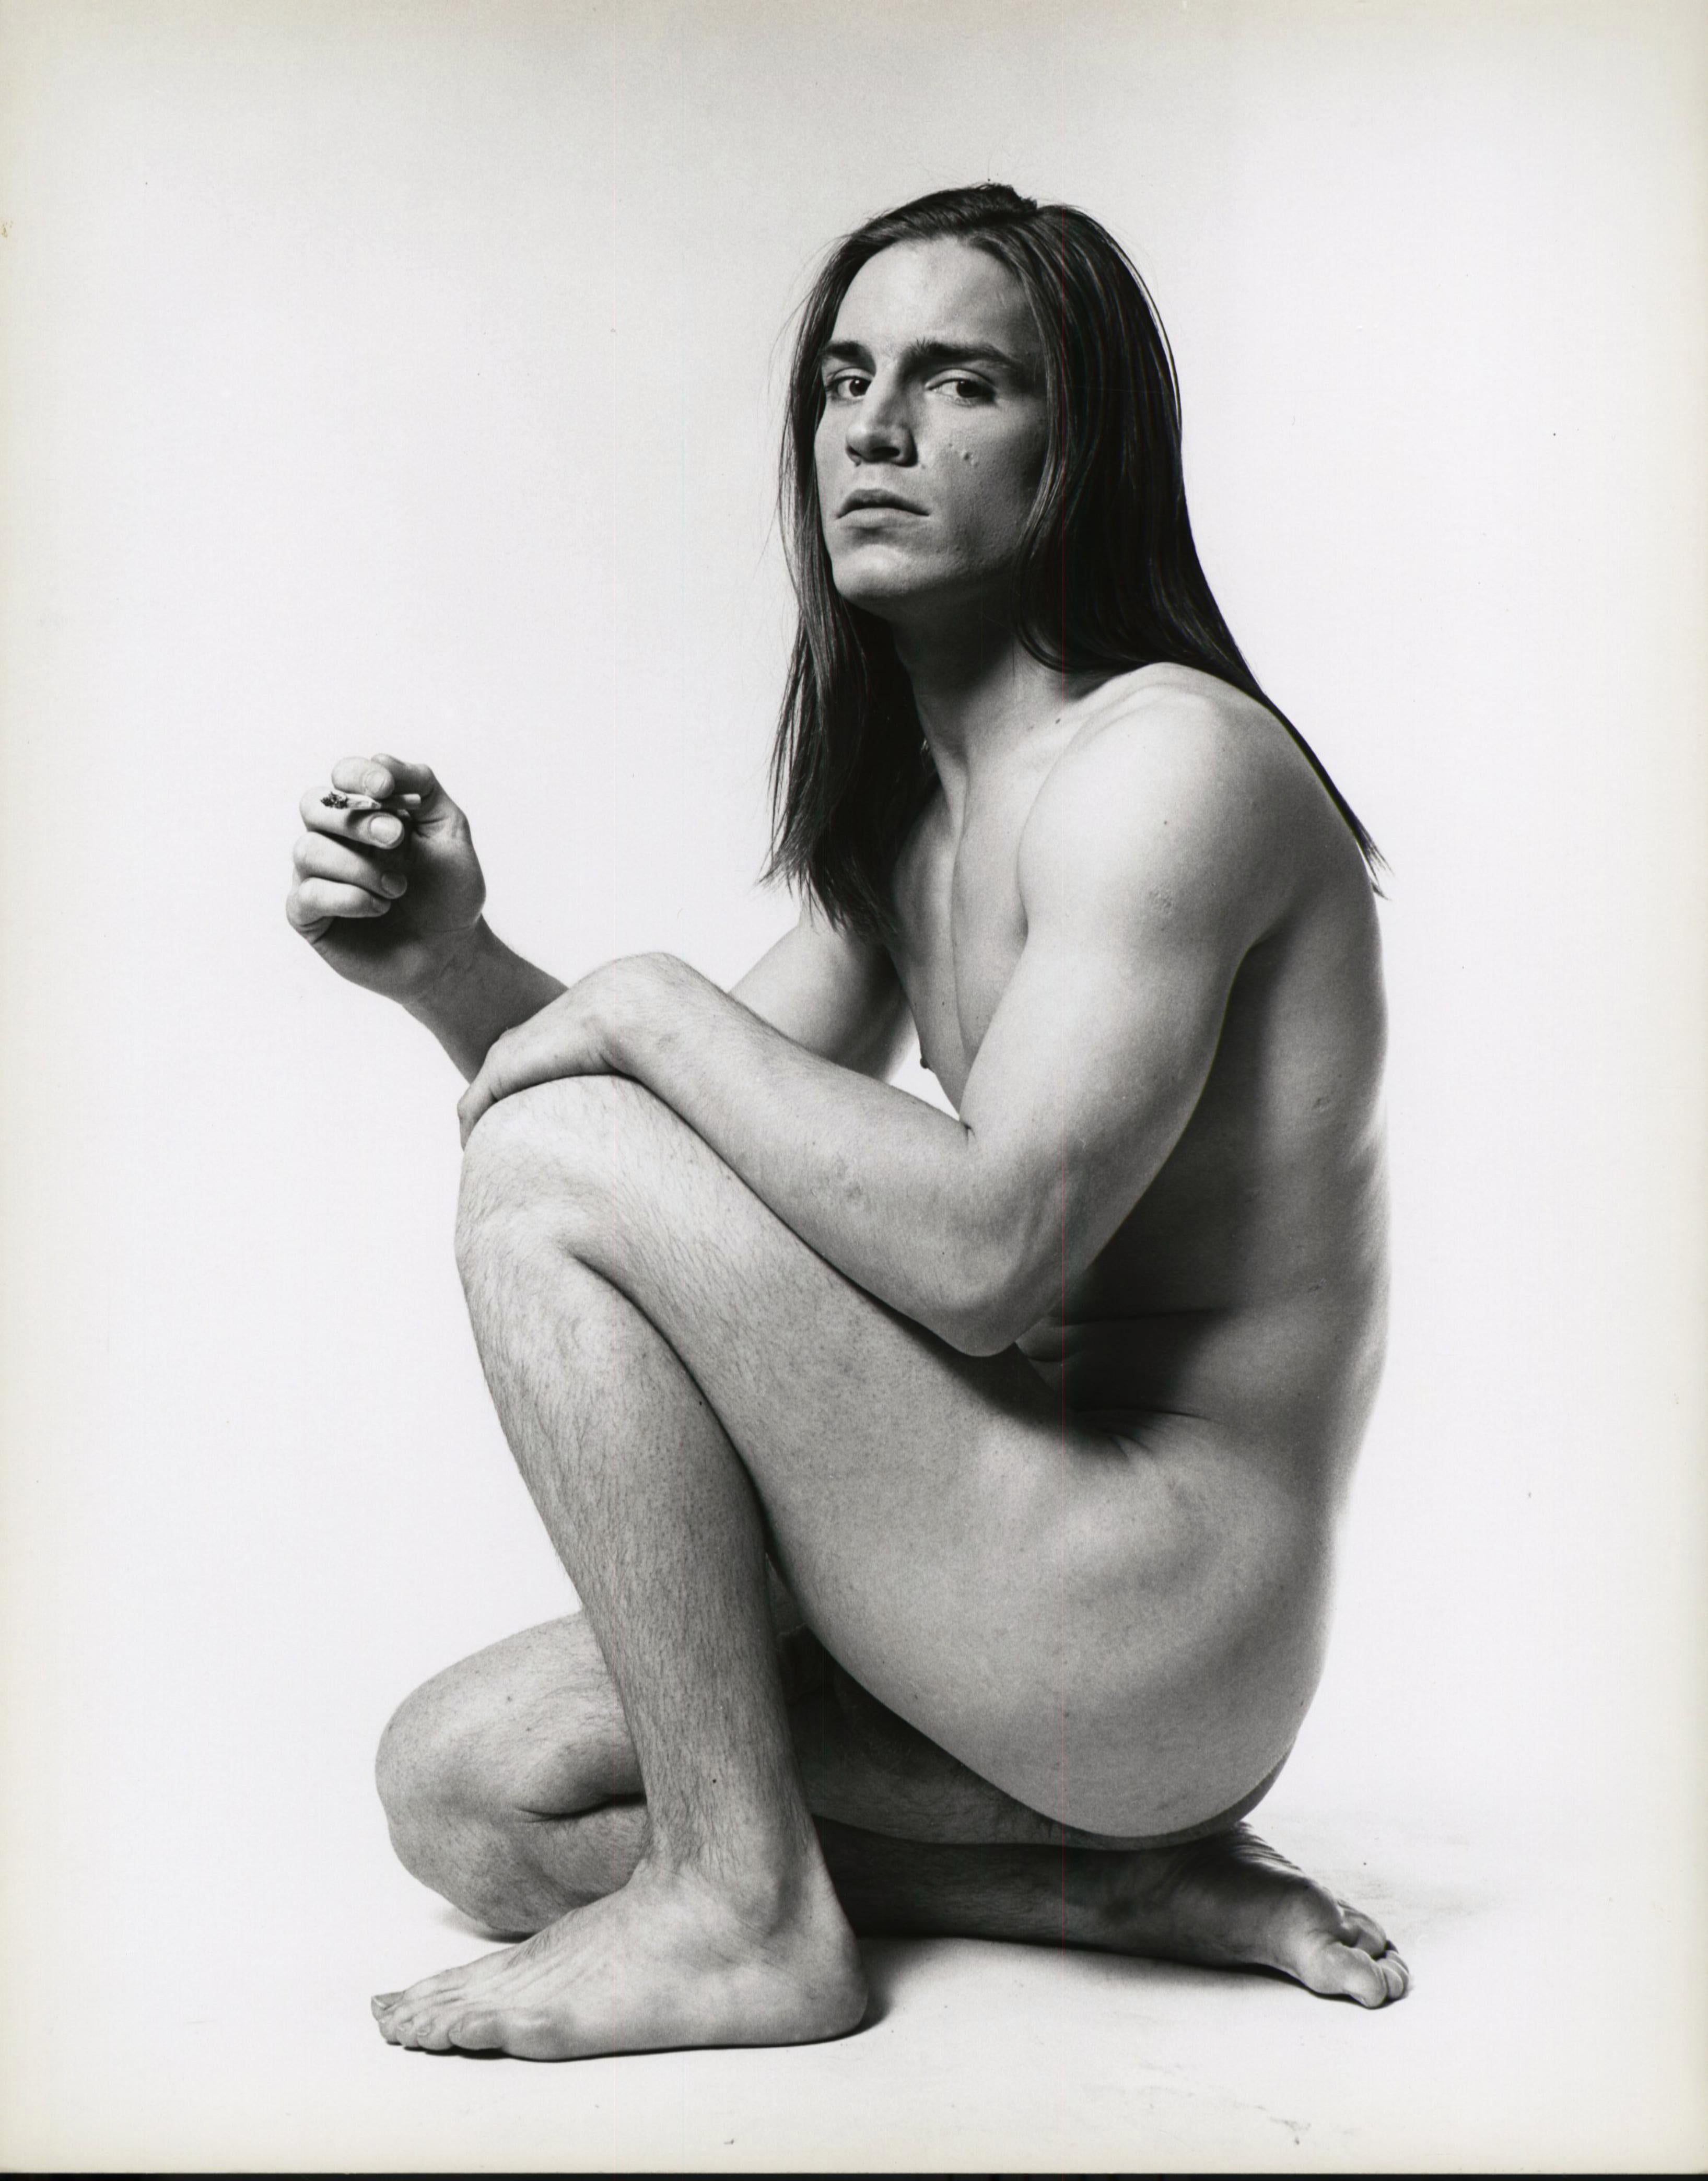 Jack Mitchell Nude Photograph - Warhol superstar Joe Dallesandro photographed nude for 'After Dark' magazine